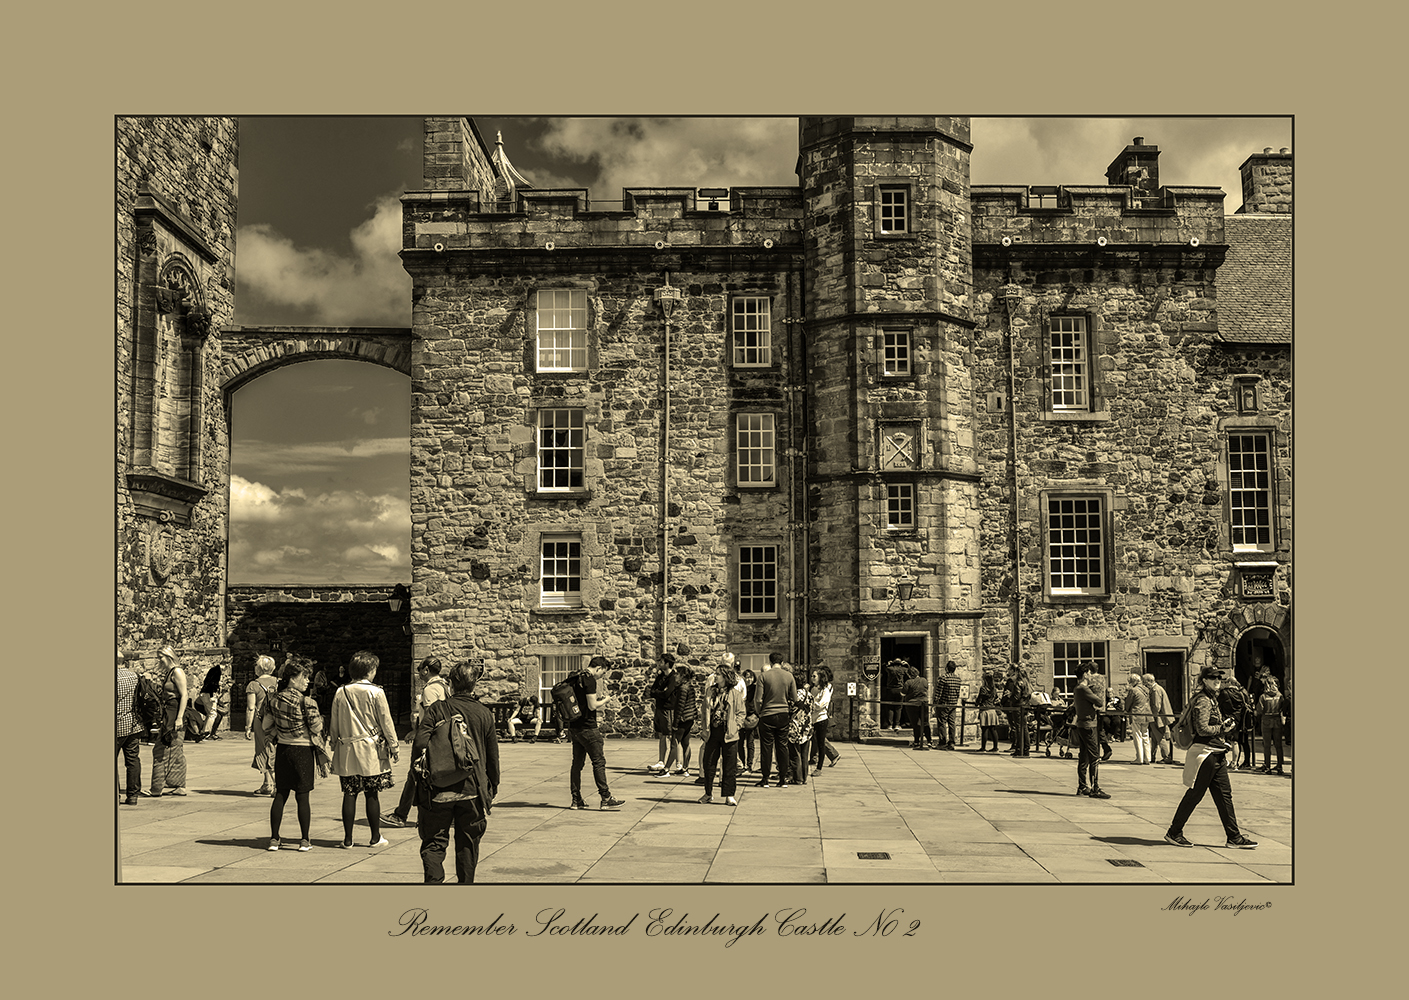 Remember Scotland Edinburgh Castle No 2